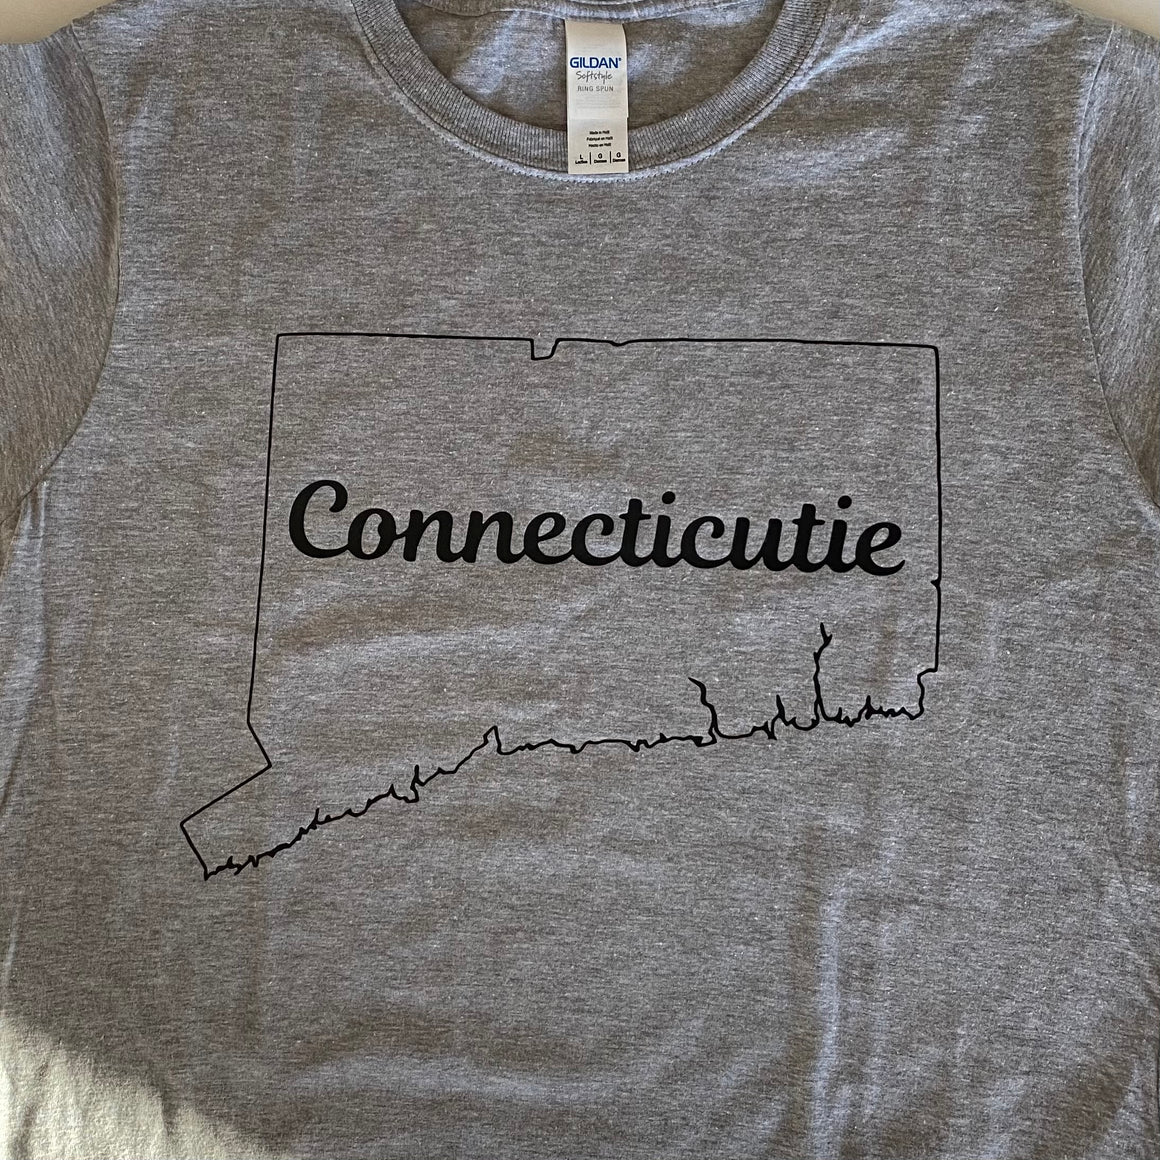 CT Connecticut Valentine’s Day shirt